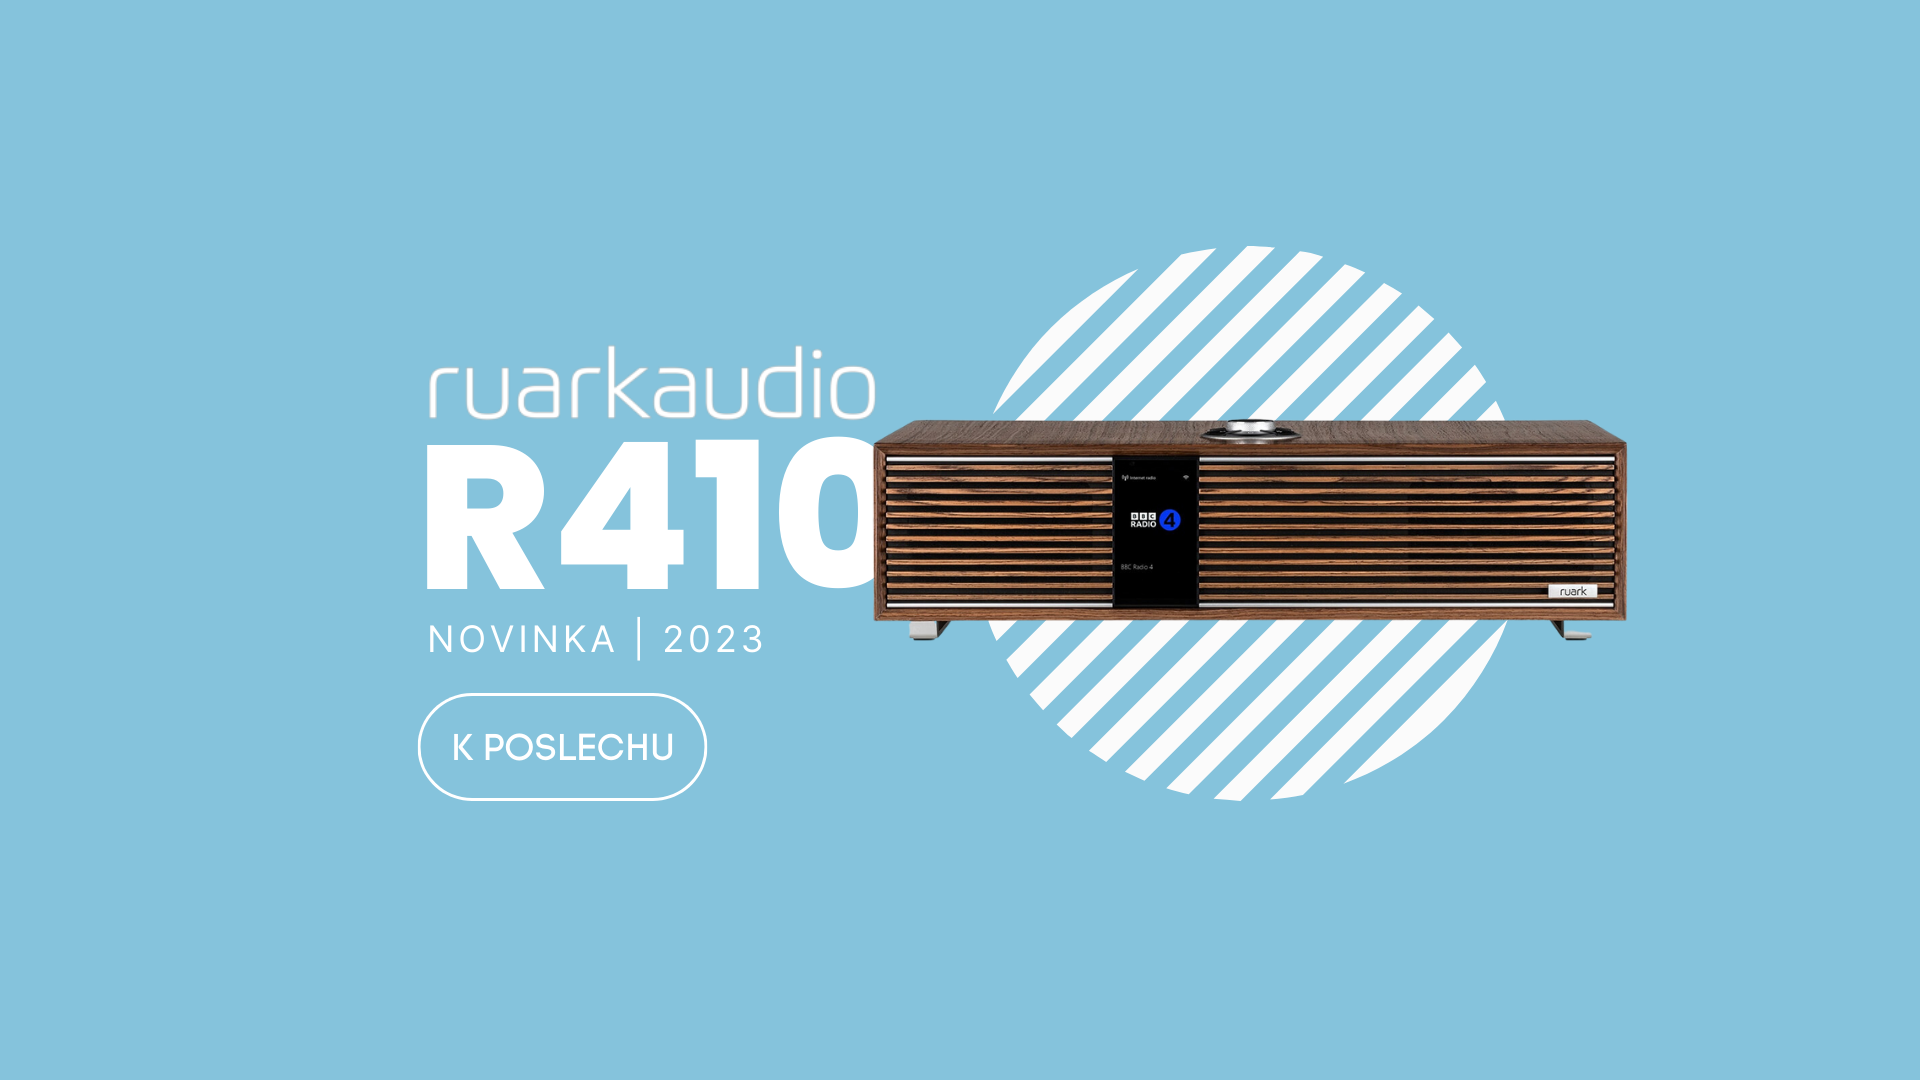 ruark-audio-r410-slider.png